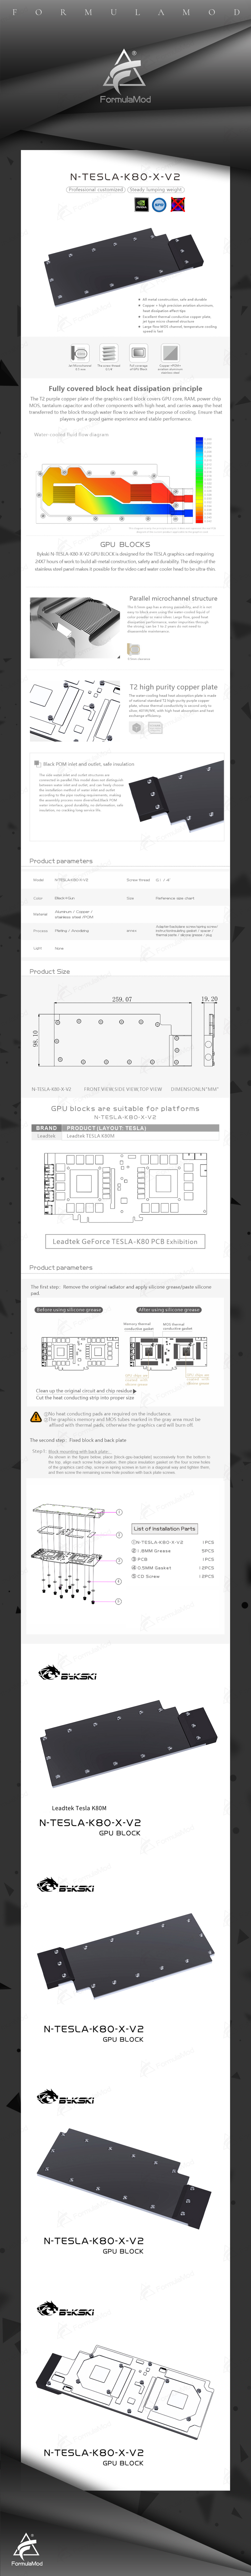 Bykski GPU Block For Leadtek Tesla K80M, High Heat Resistance Material POM + Full Metal Construction, Full Cover GPU Water Cooling Cooler Radiator Block N-TESLA-K80-X-V2  